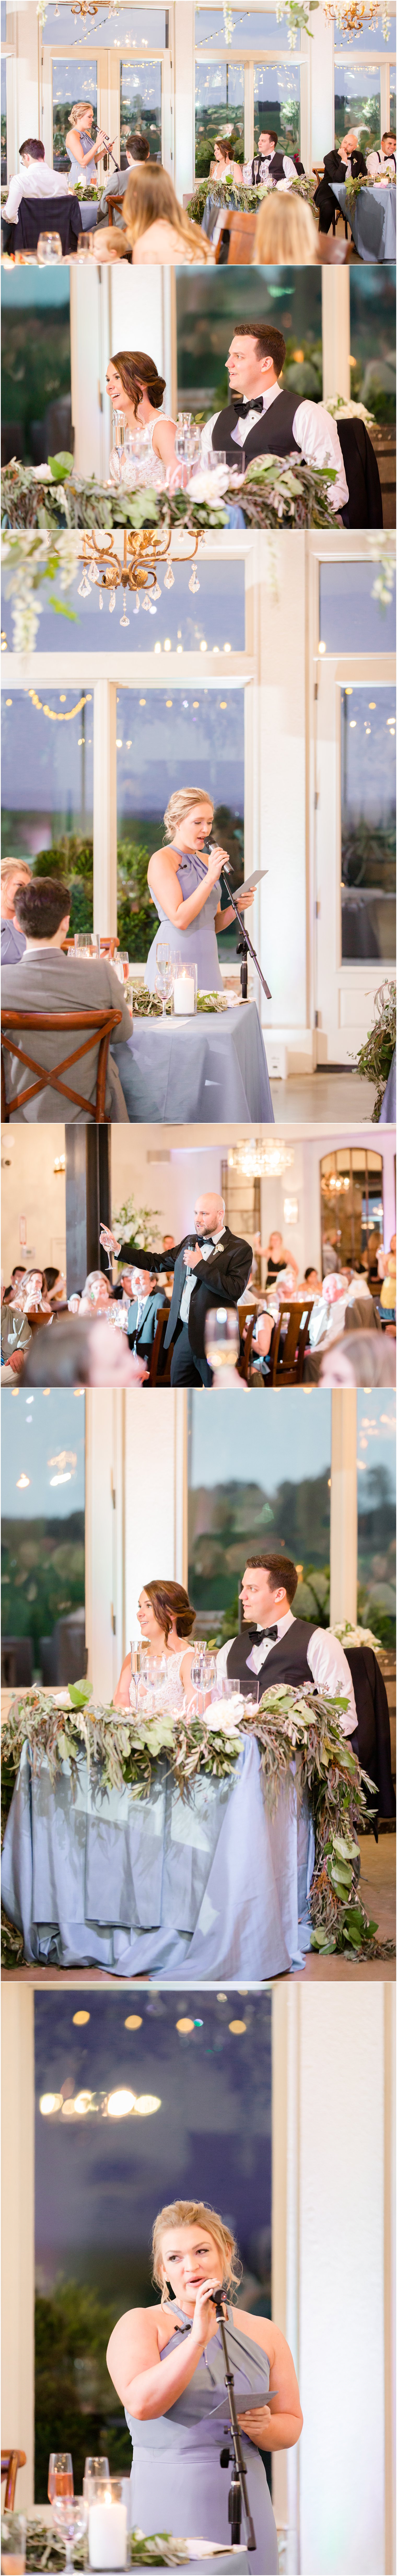 wedding toasts in Stone Tower Winery Wedding Photos by Idalia Photography